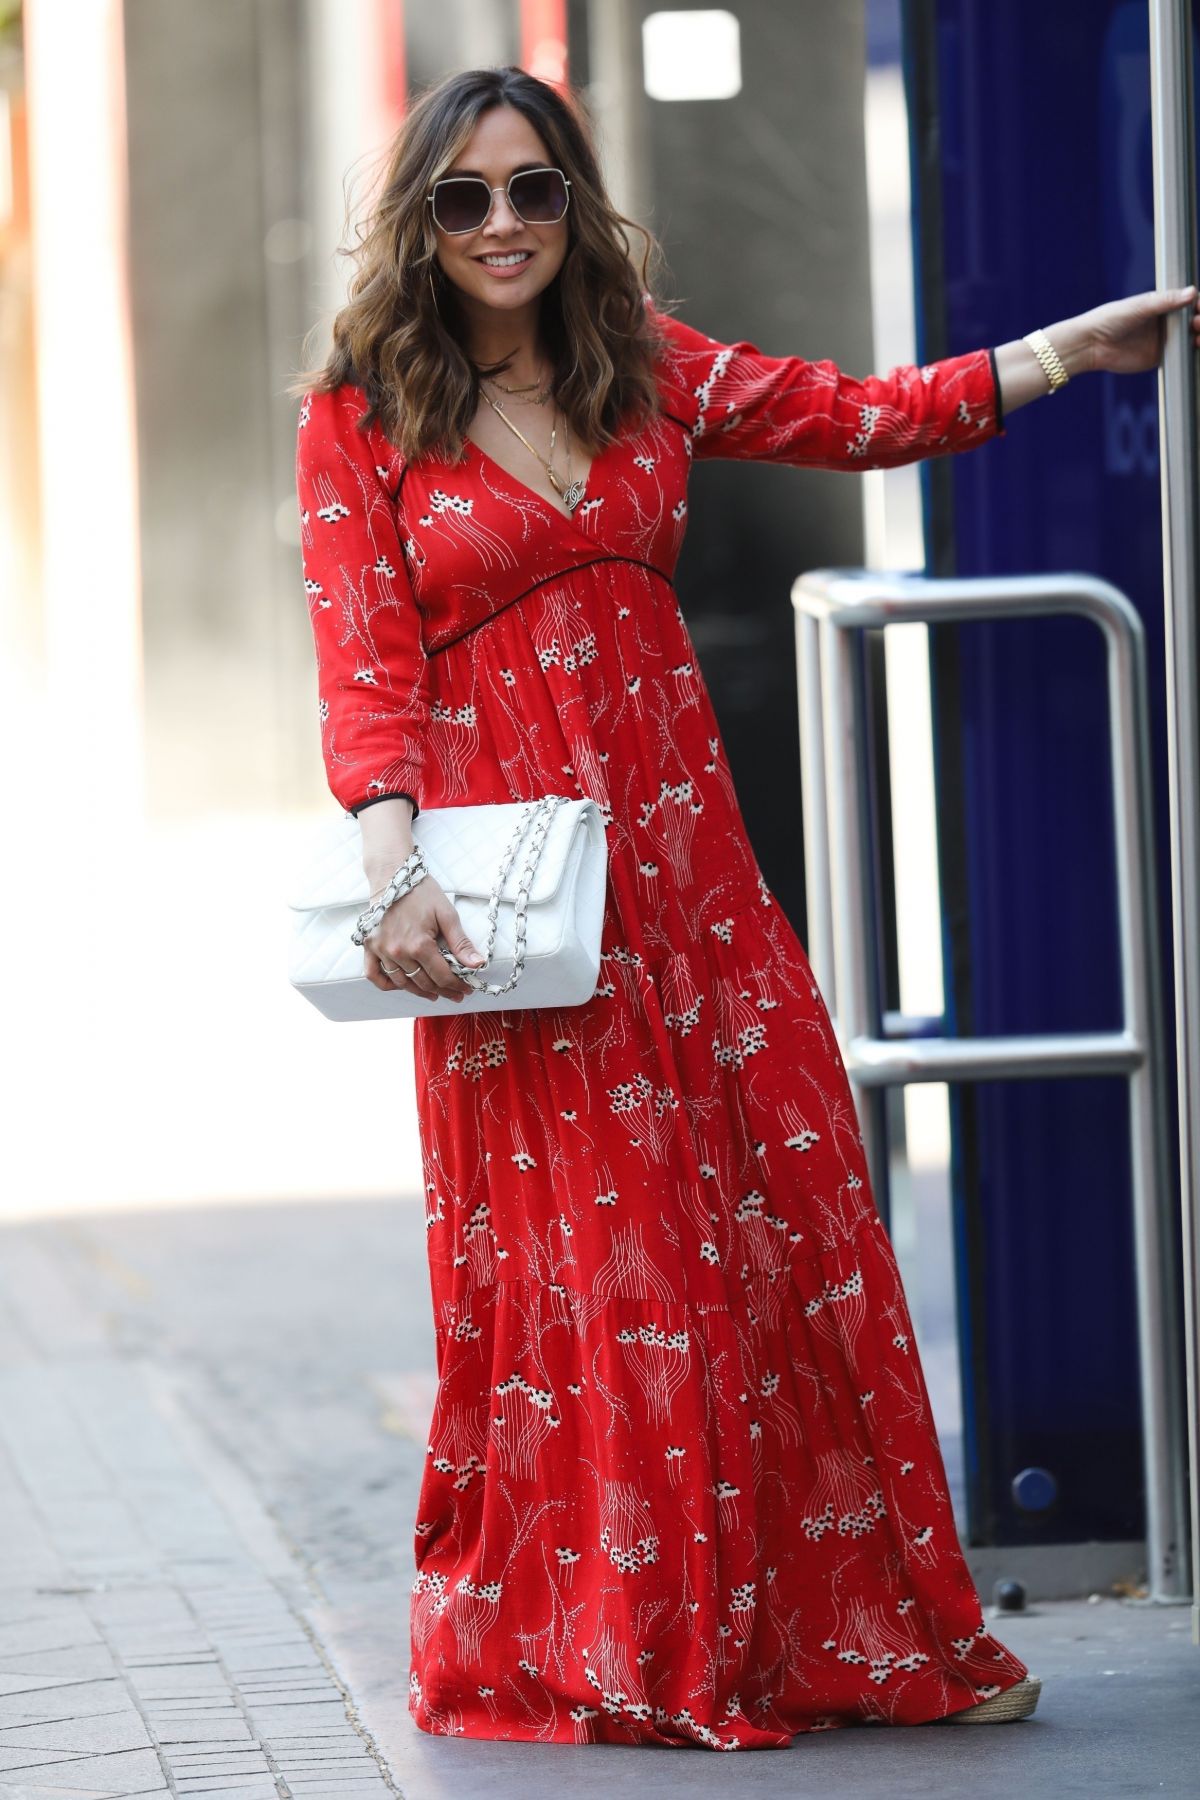 Myleene Klass In Red Maxi Dress Arrives At Smooth Radio In London 04 25 2020 Hawtcelebs